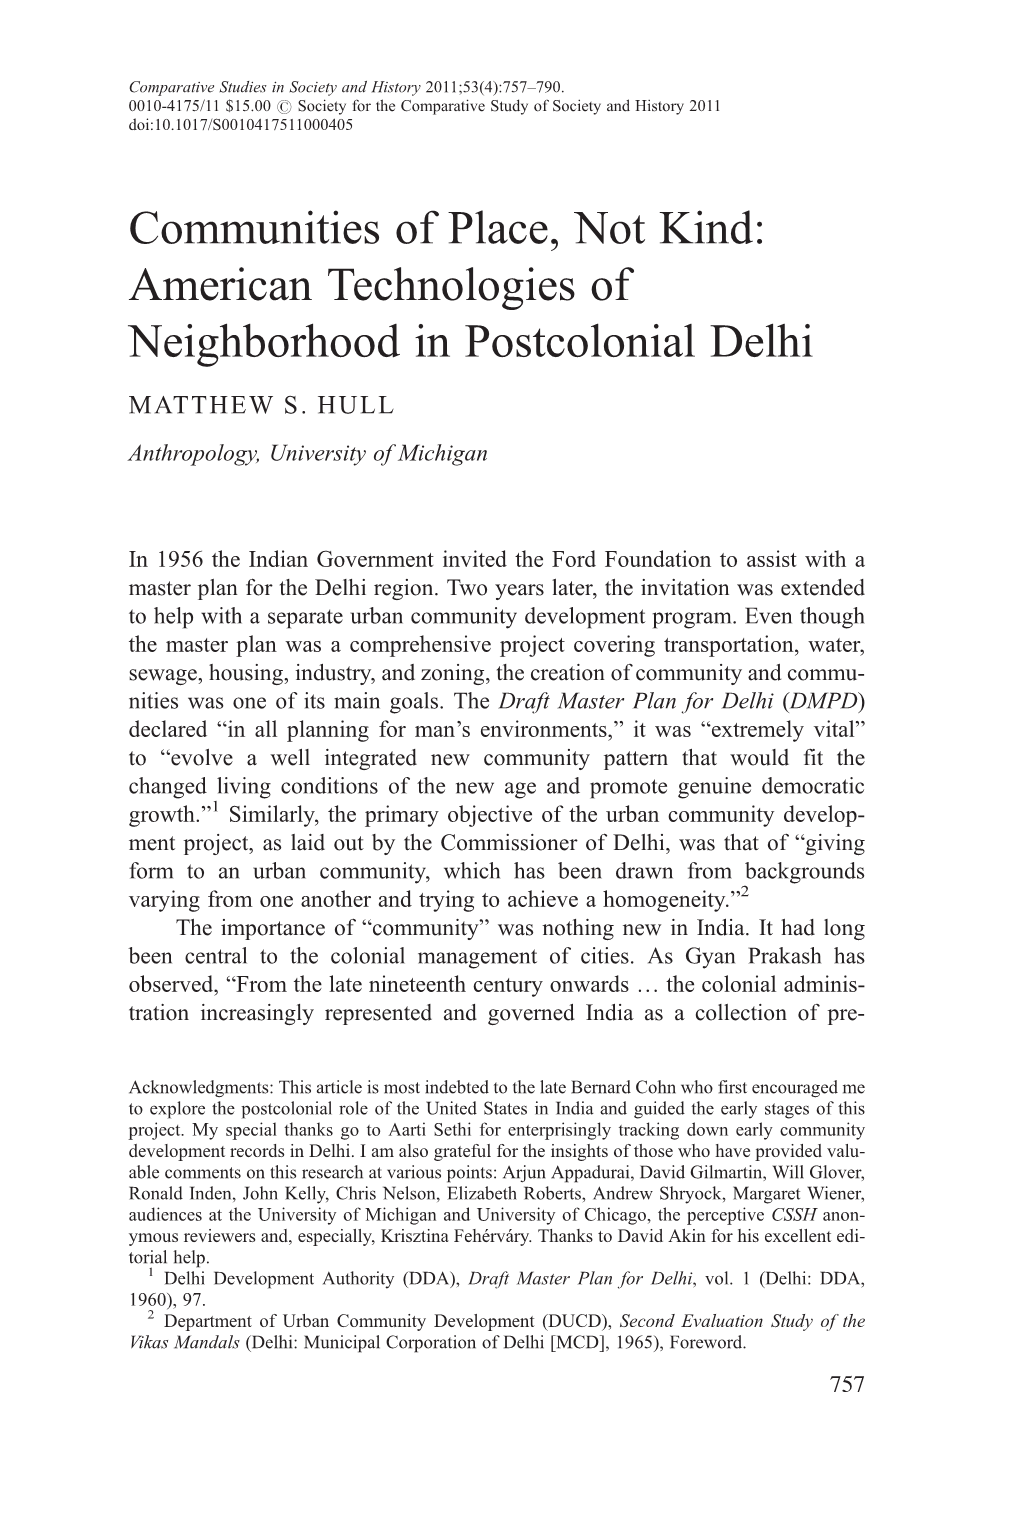 Communities of Place, Not Kind: American Technologies of Neighborhood in Postcolonial Delhi